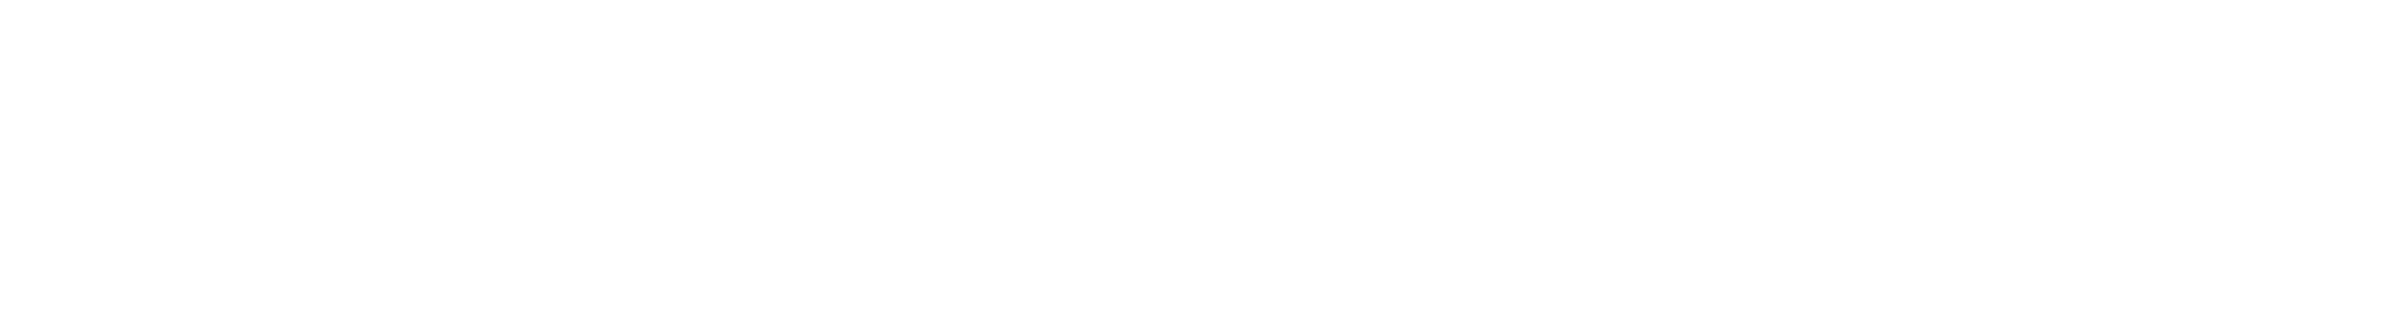 Thomson Reuters Logo PNG Transparent & SVG Vector.